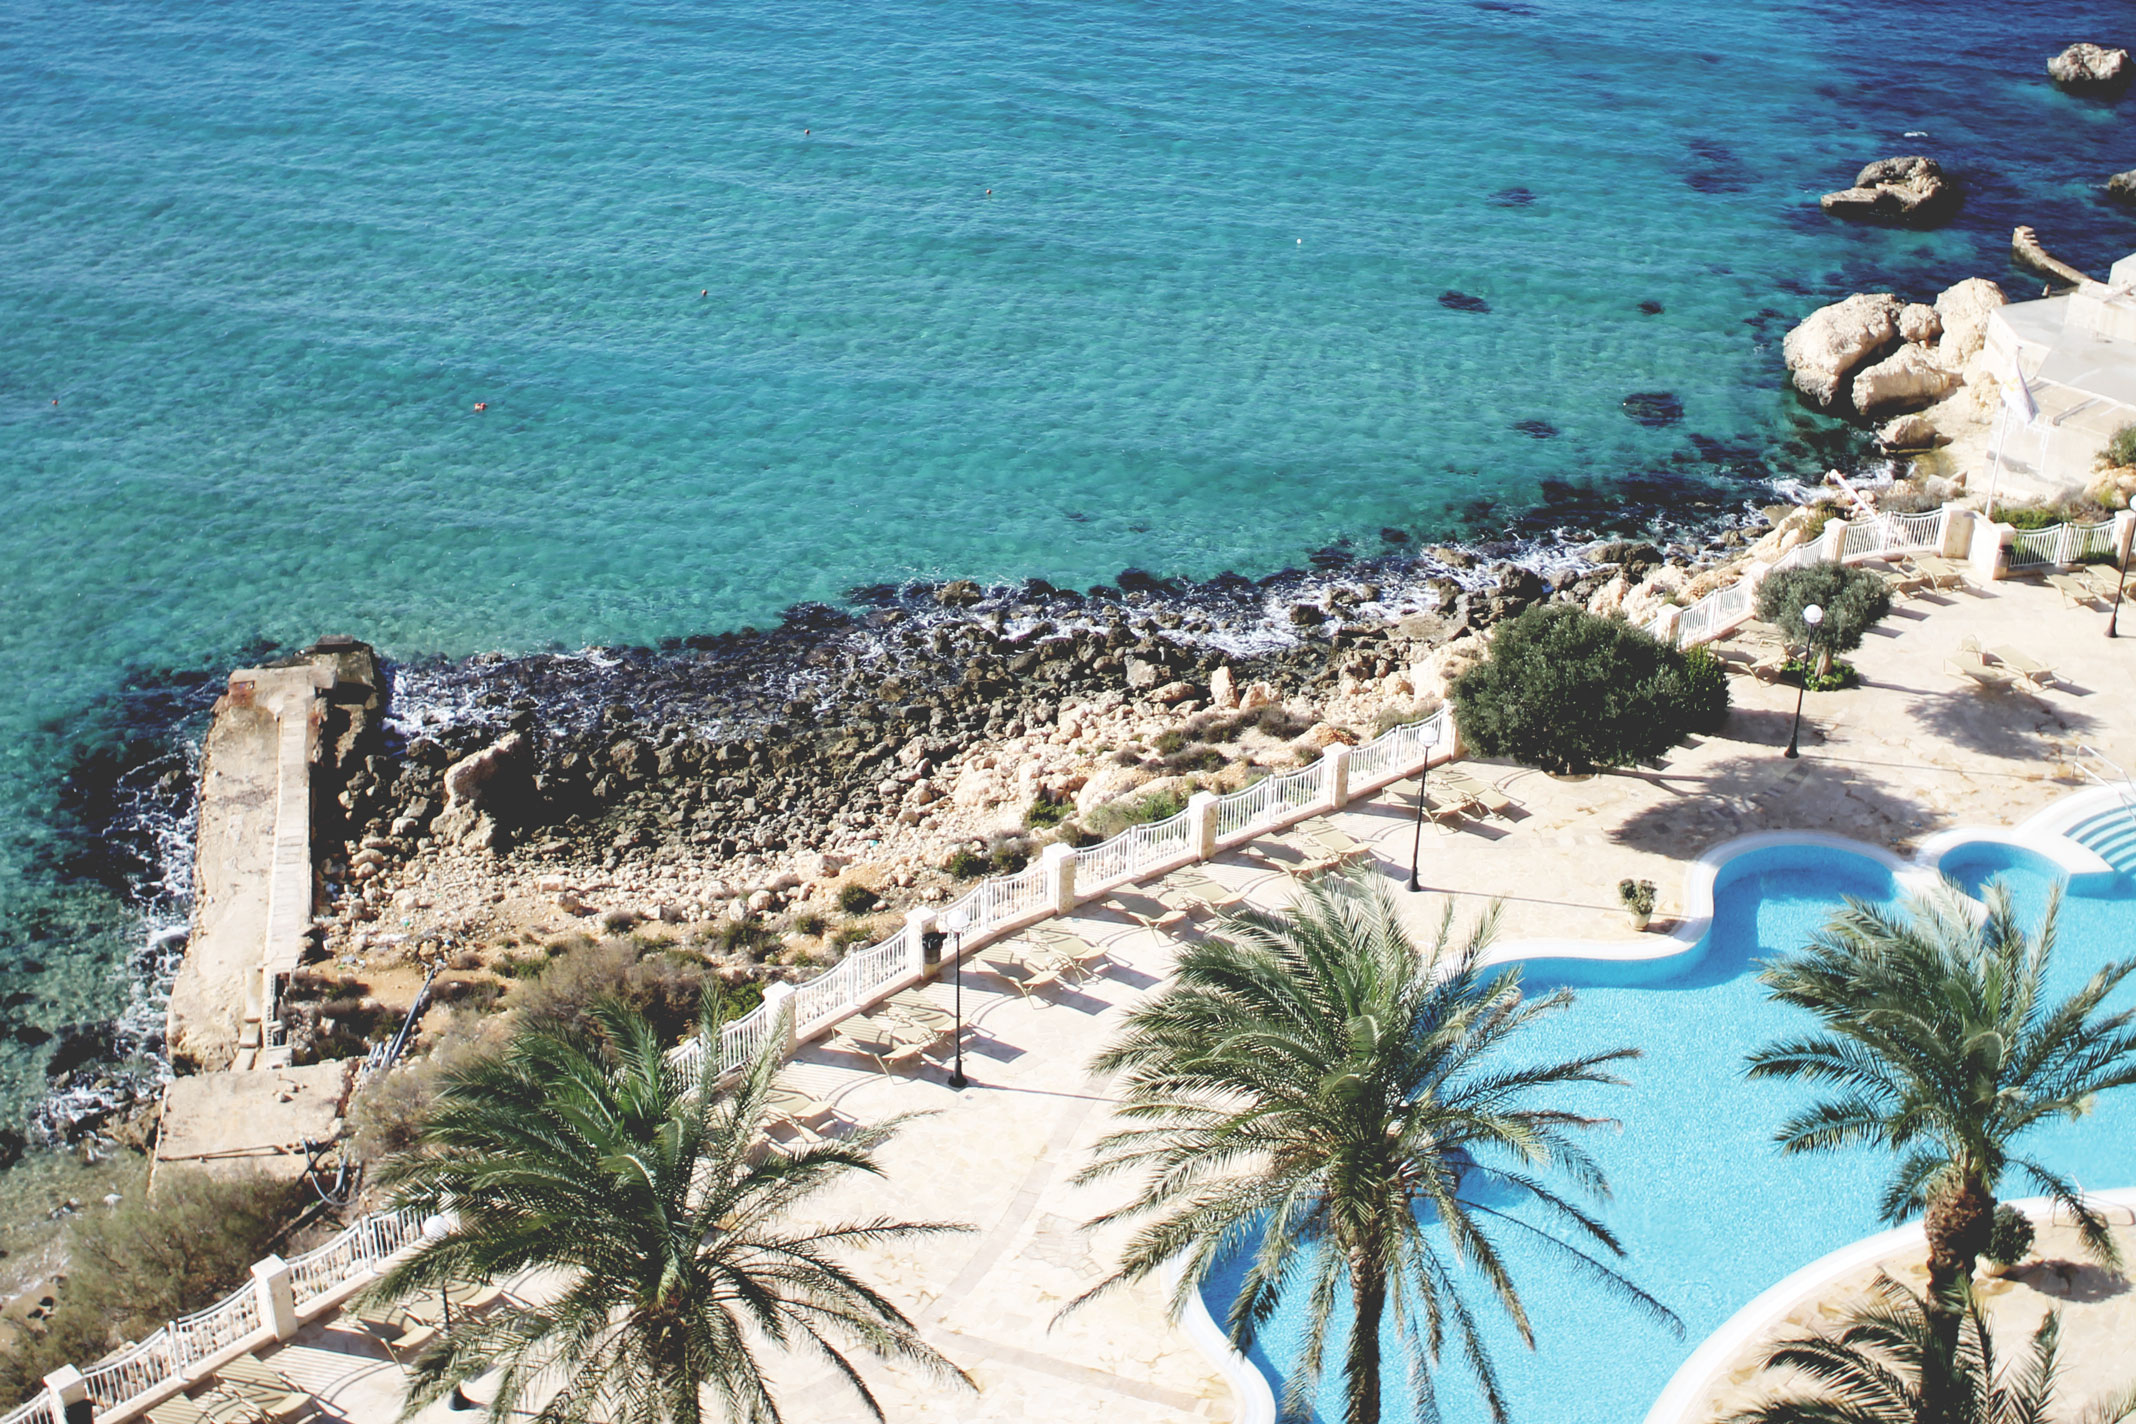 Styleat30 Fashion & Travel Blog - Radisson Blu Resort & Spa, Malta, Golden Sands Holiday - 30